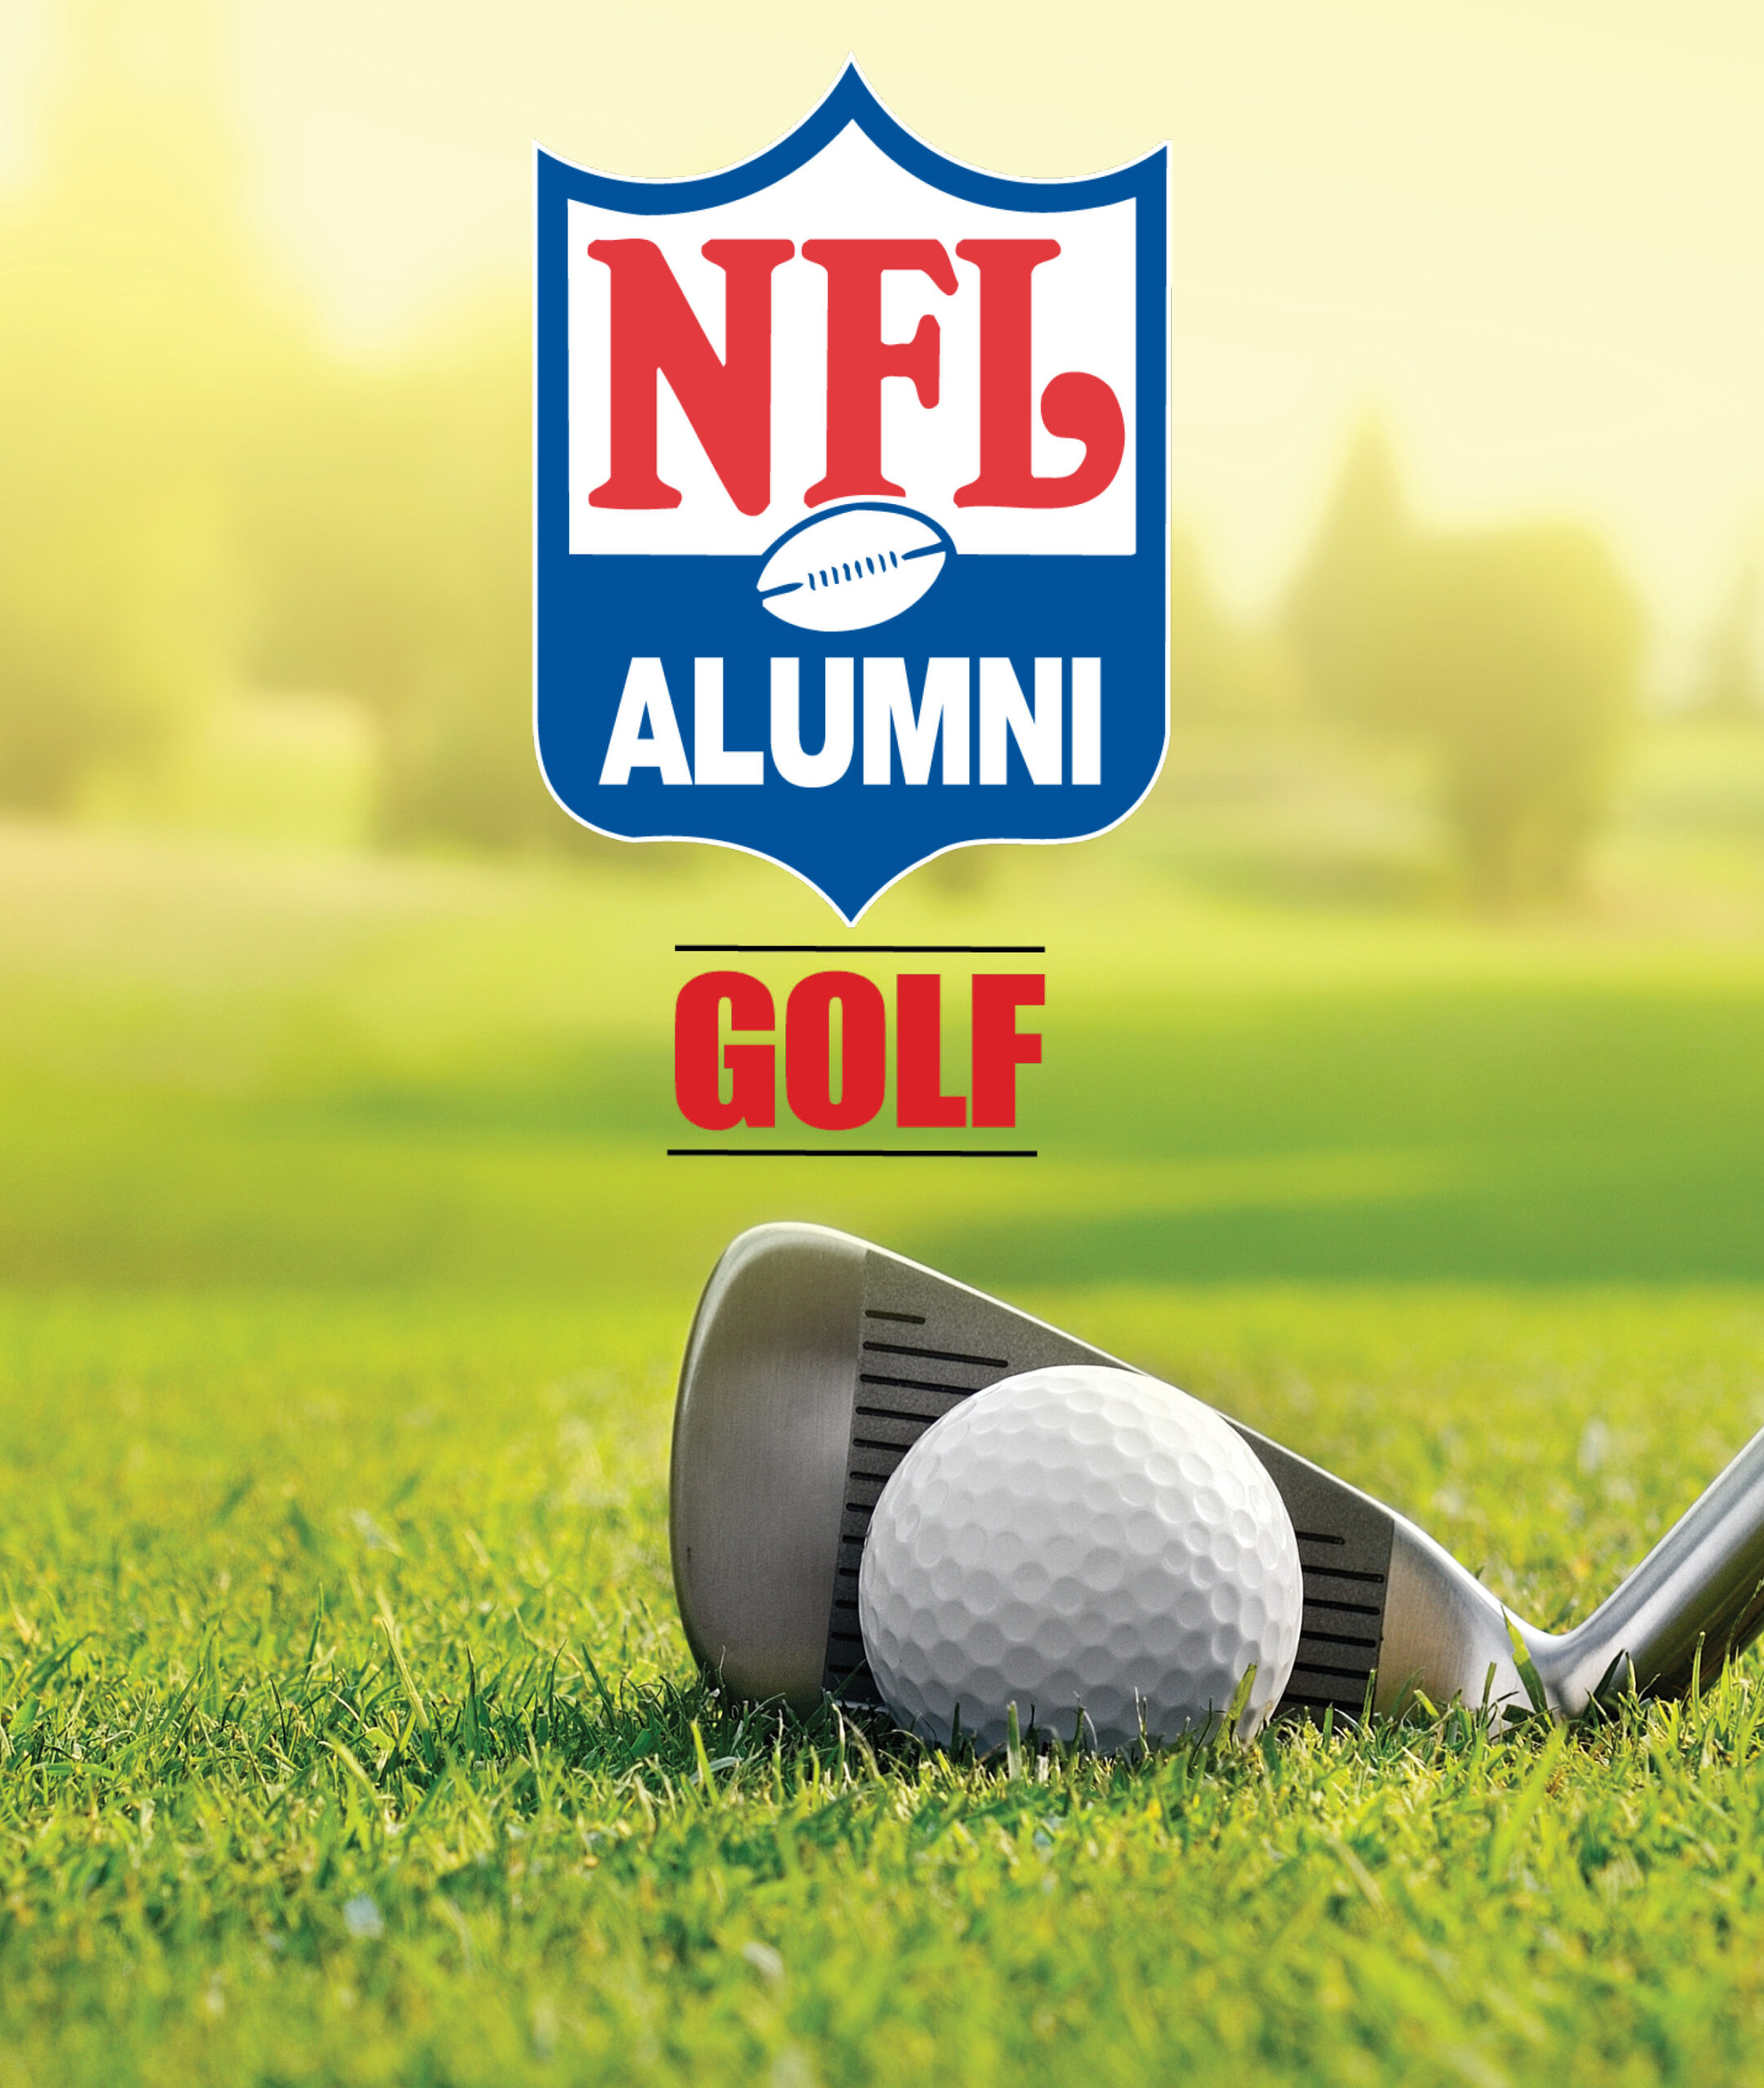 NFL Alumni Golf